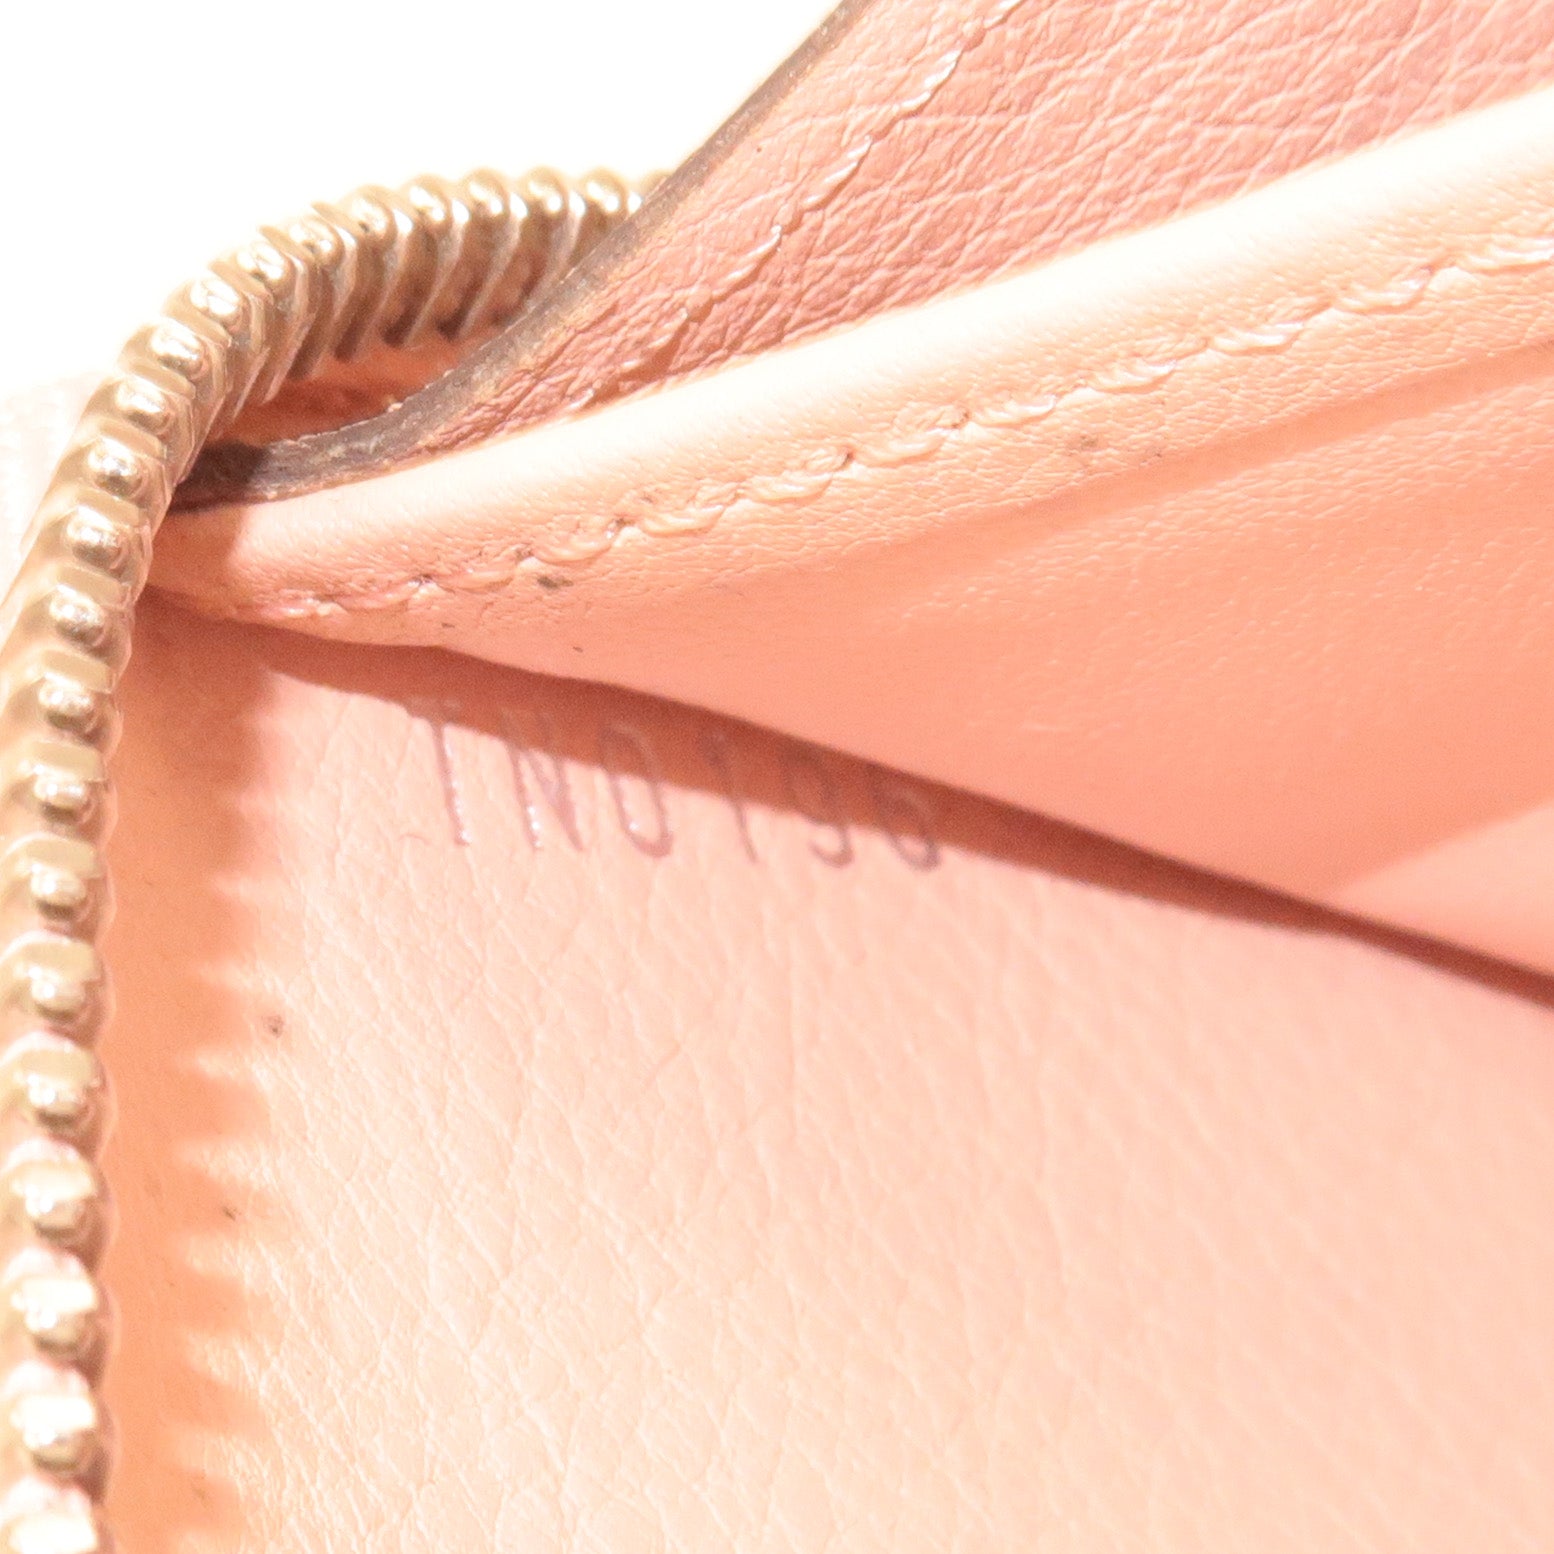 Louis Vuitton Mahina Leather Zippy Wallet Magnolia